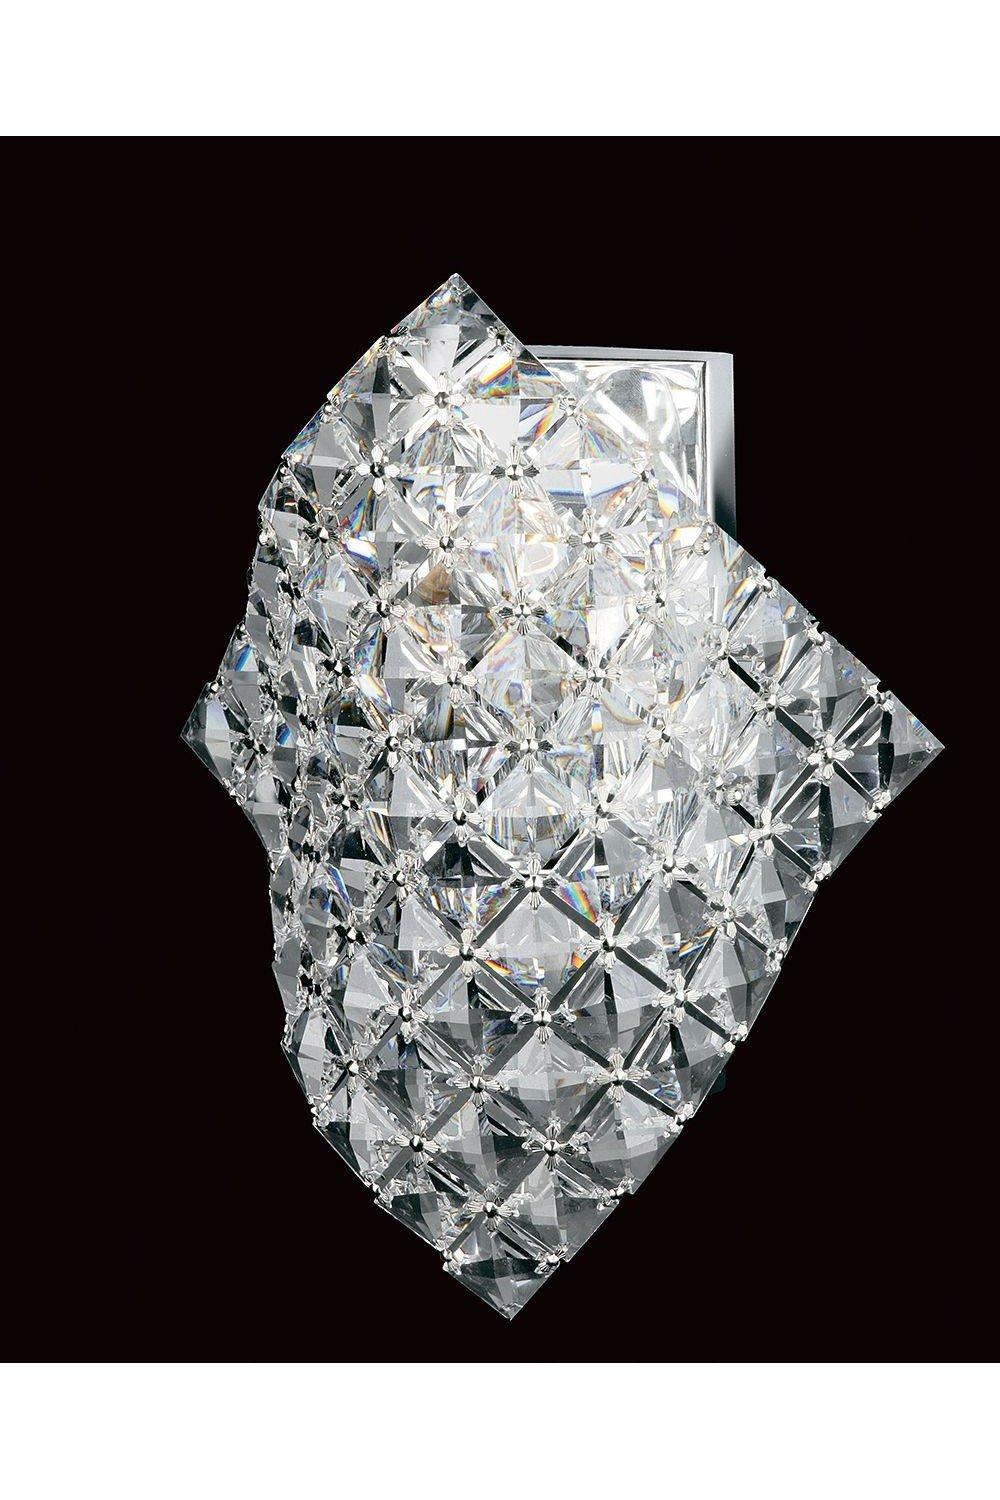 Diamond Crystal Single Wall Light Chrome Frame